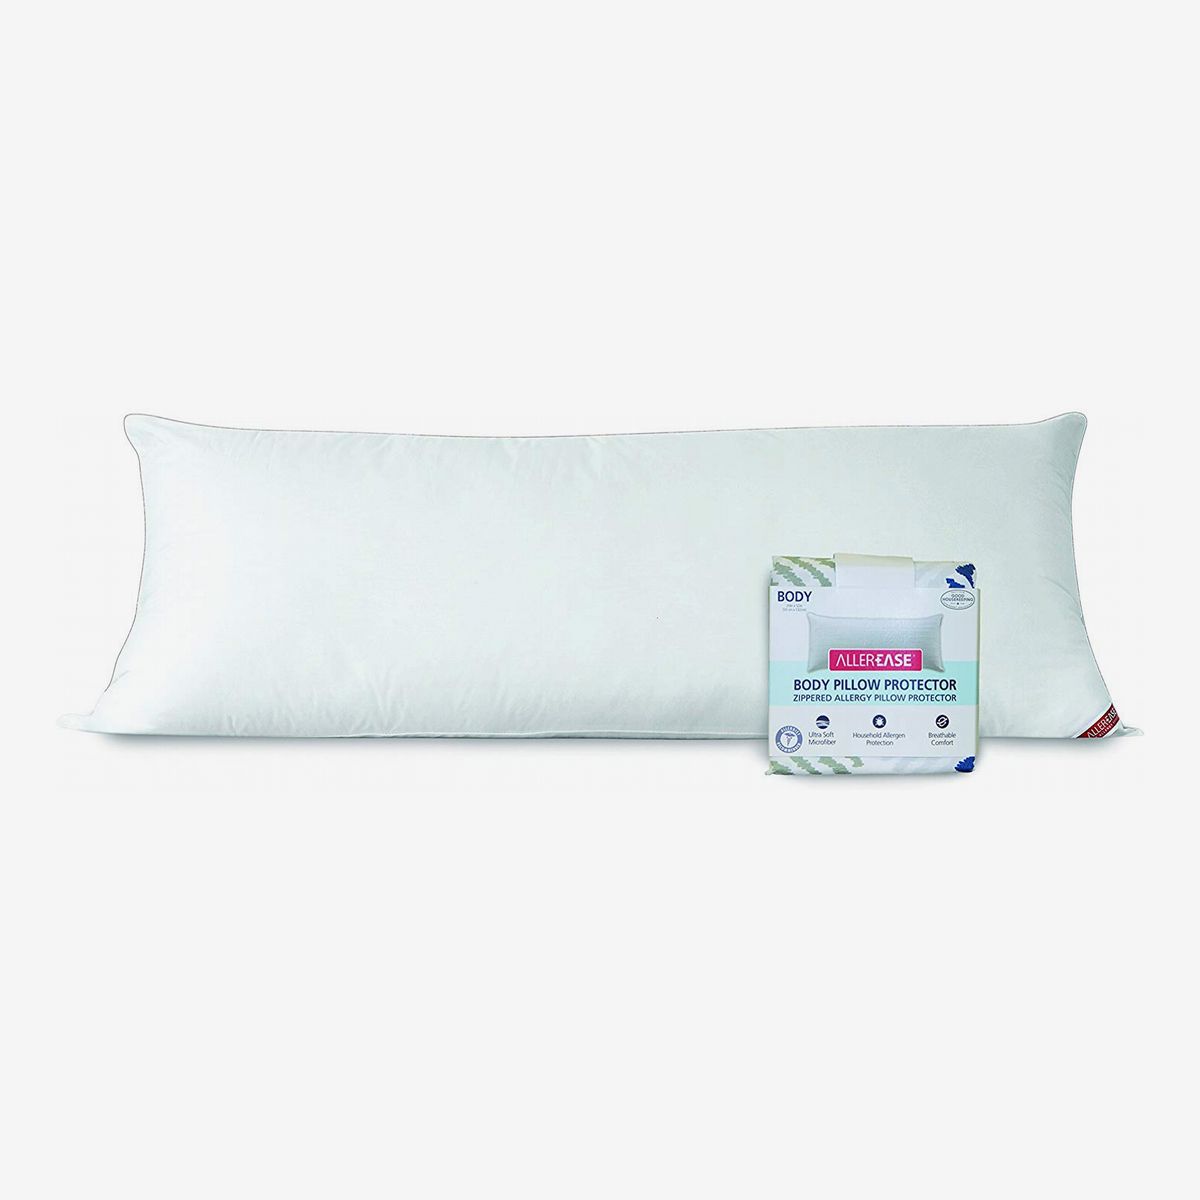 11 Best Body Pillows 2020 | The 